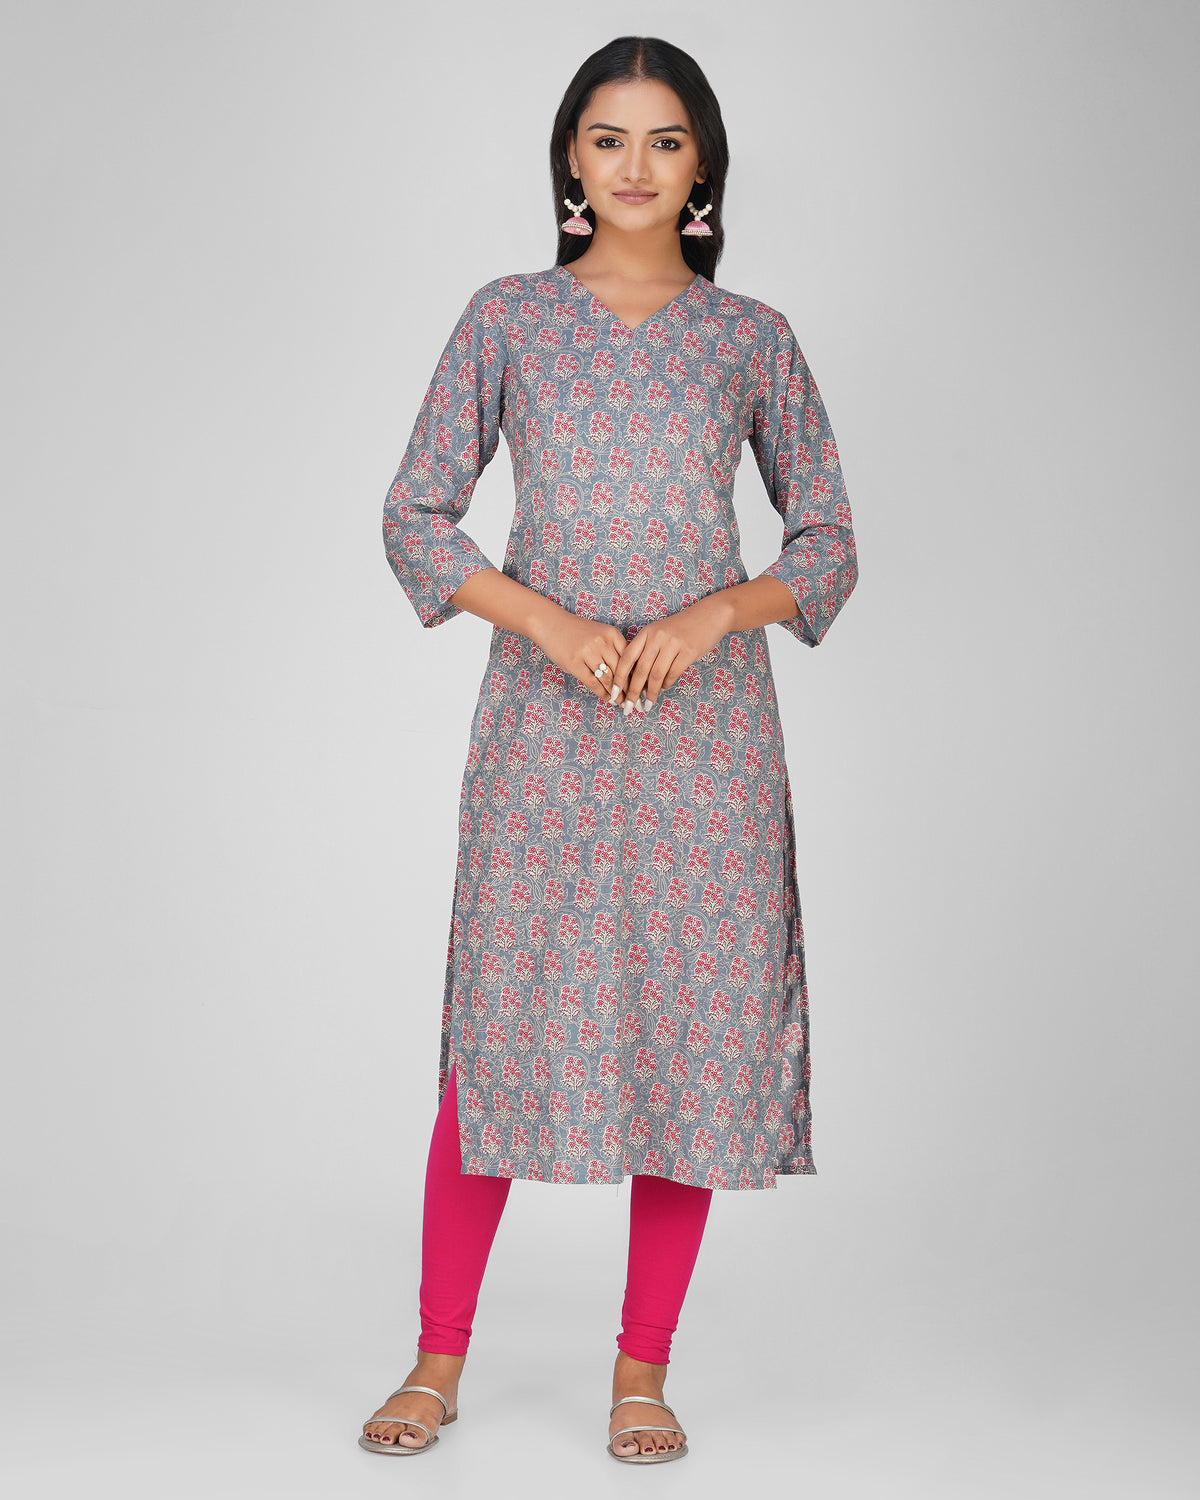 Shop Designer Indian Women Kurtis Online 2022 with Suvidha Fashion